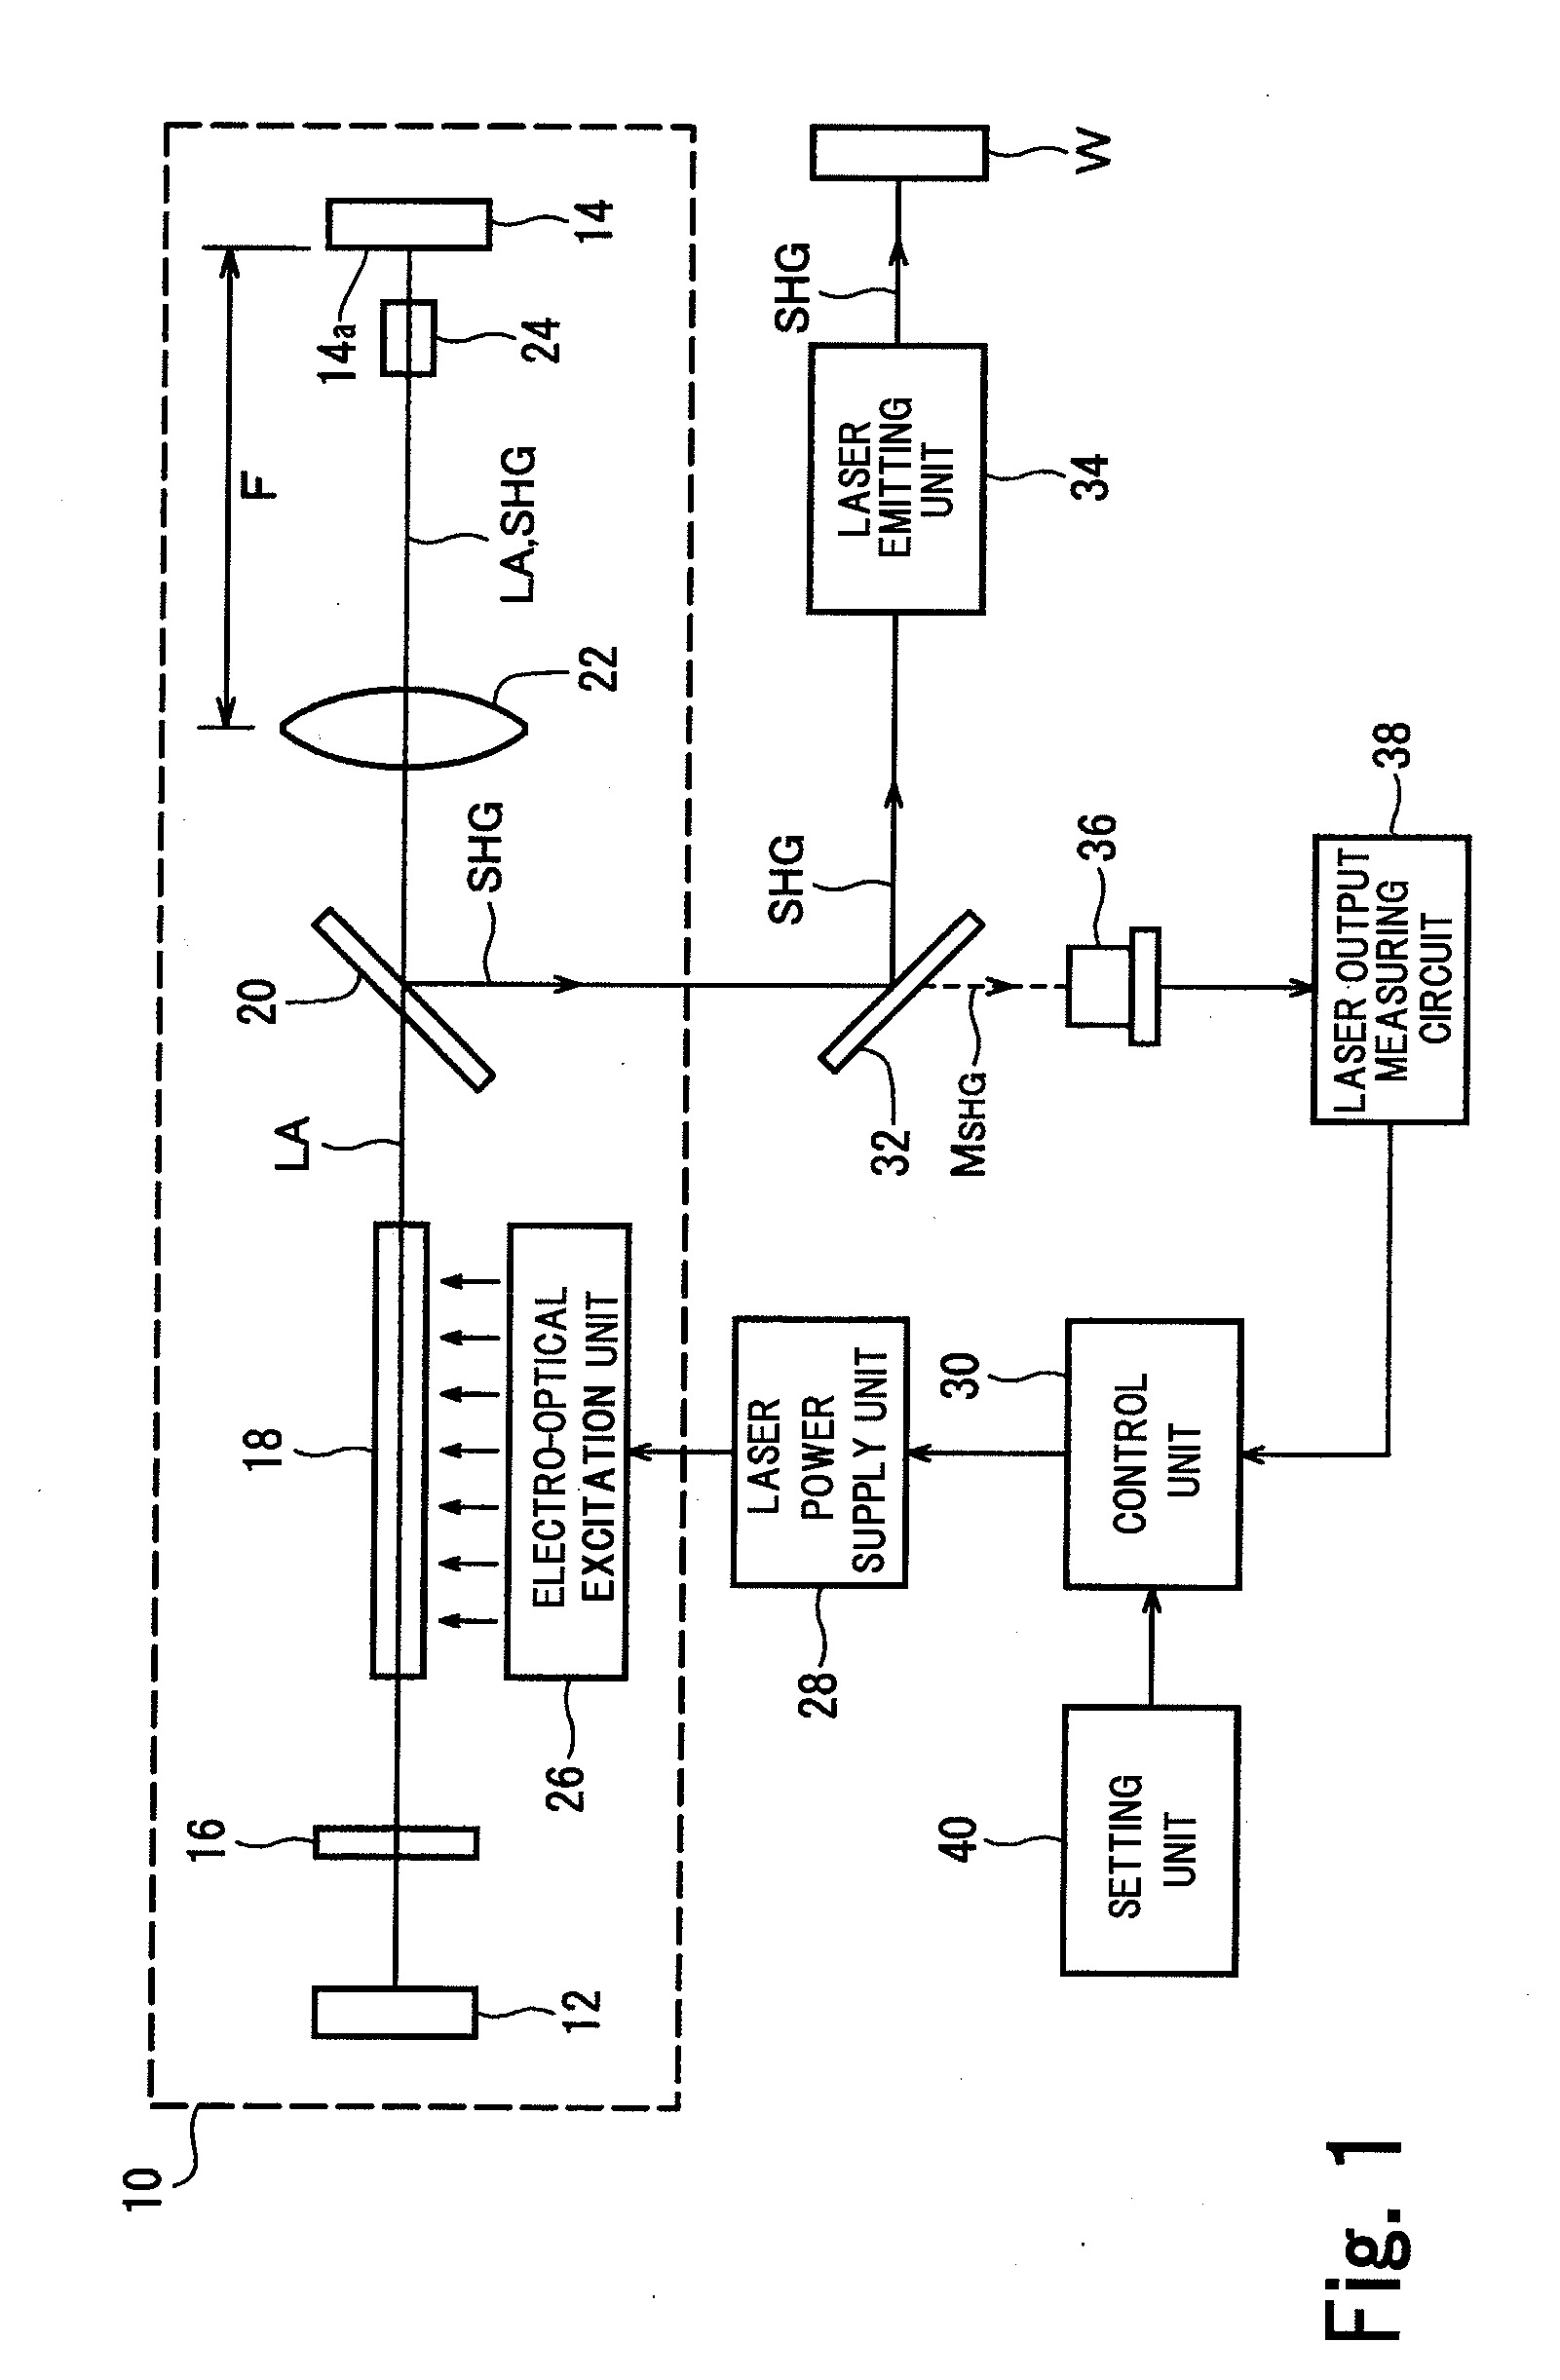 Laser oscillator and laser processing apparatus